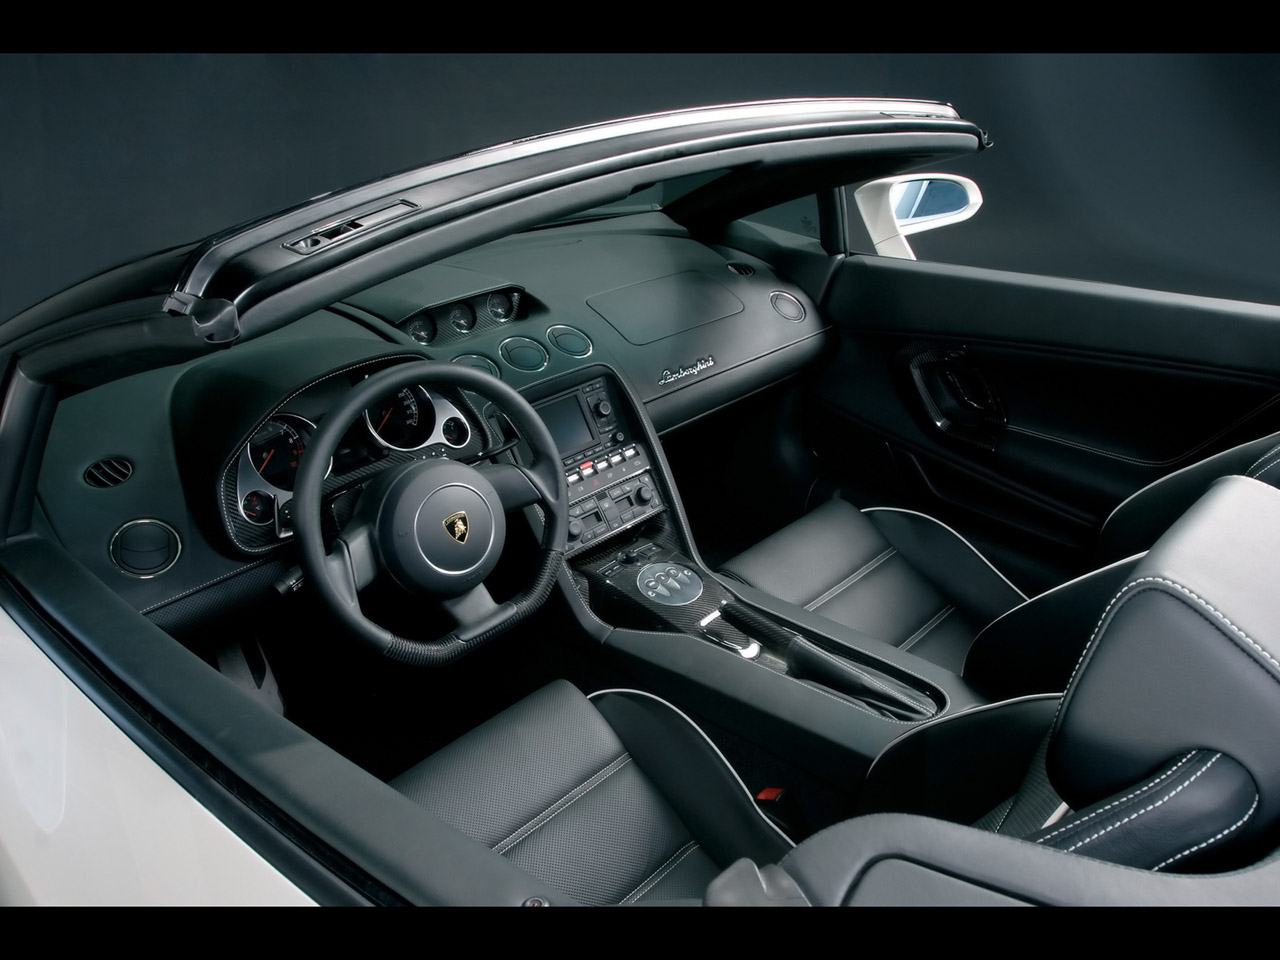 Cool Cars: Lamborghini Gallardo spyder Interior